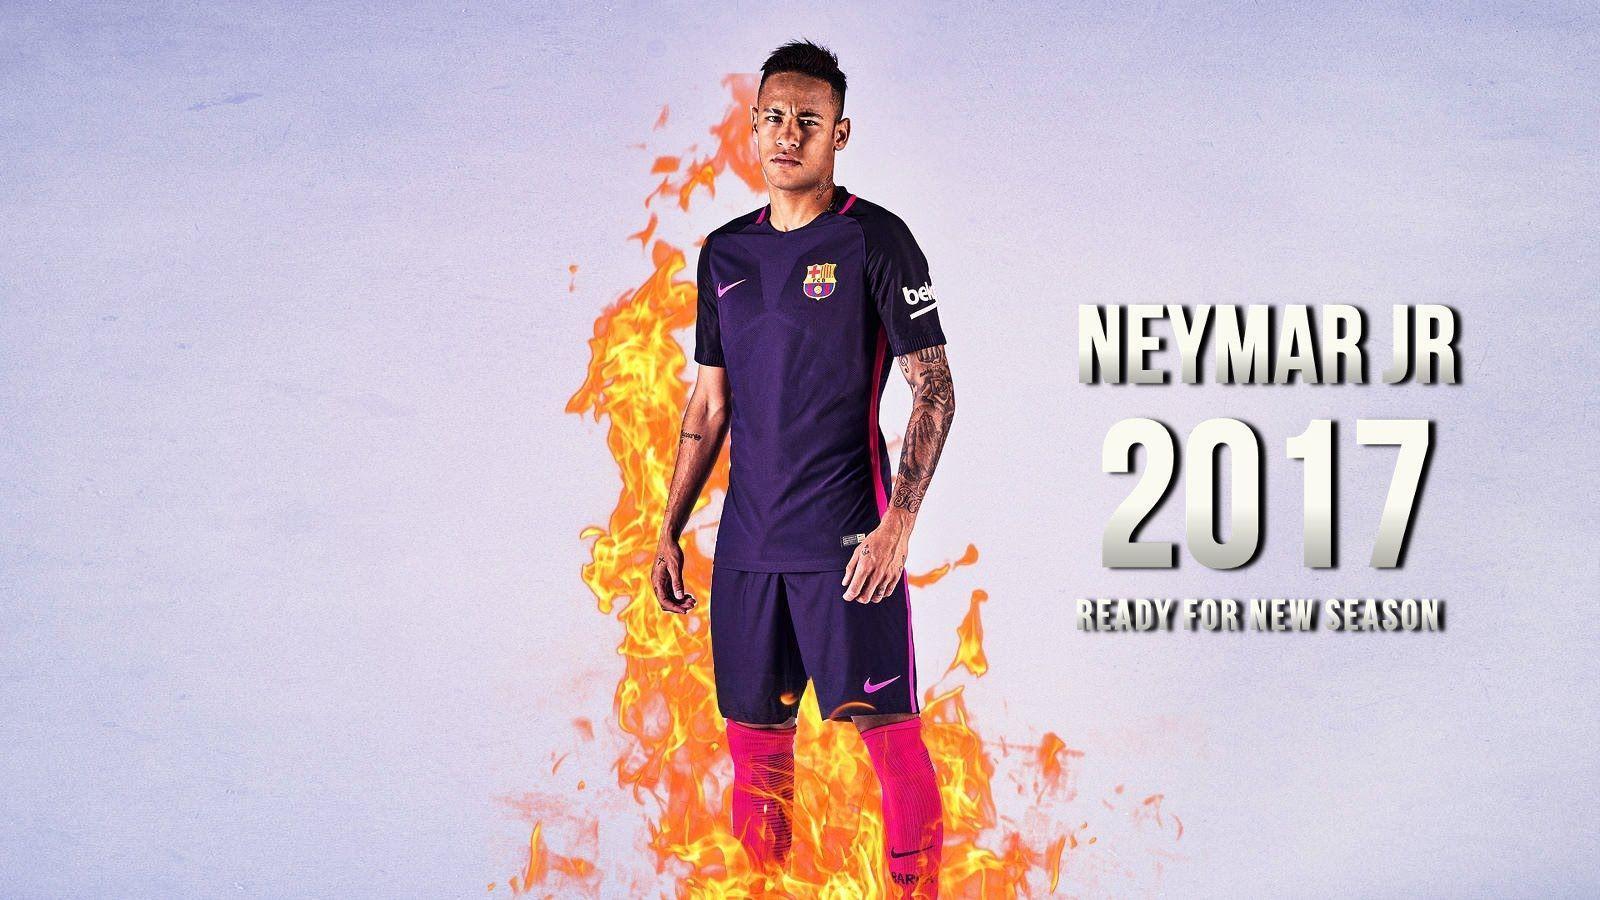 Neymar 2017 Wallpaper rustic